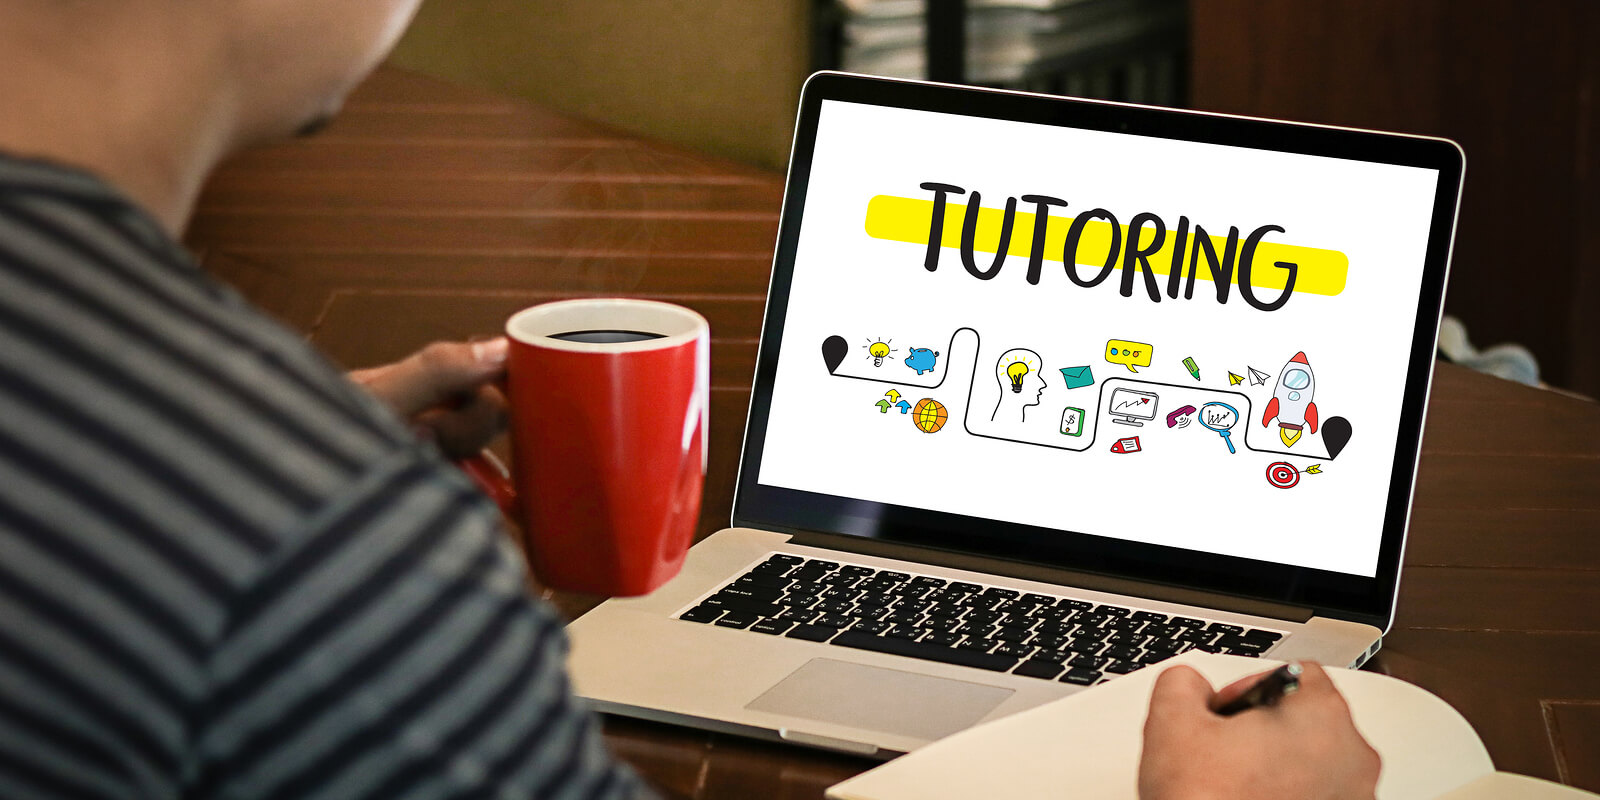 online tutor